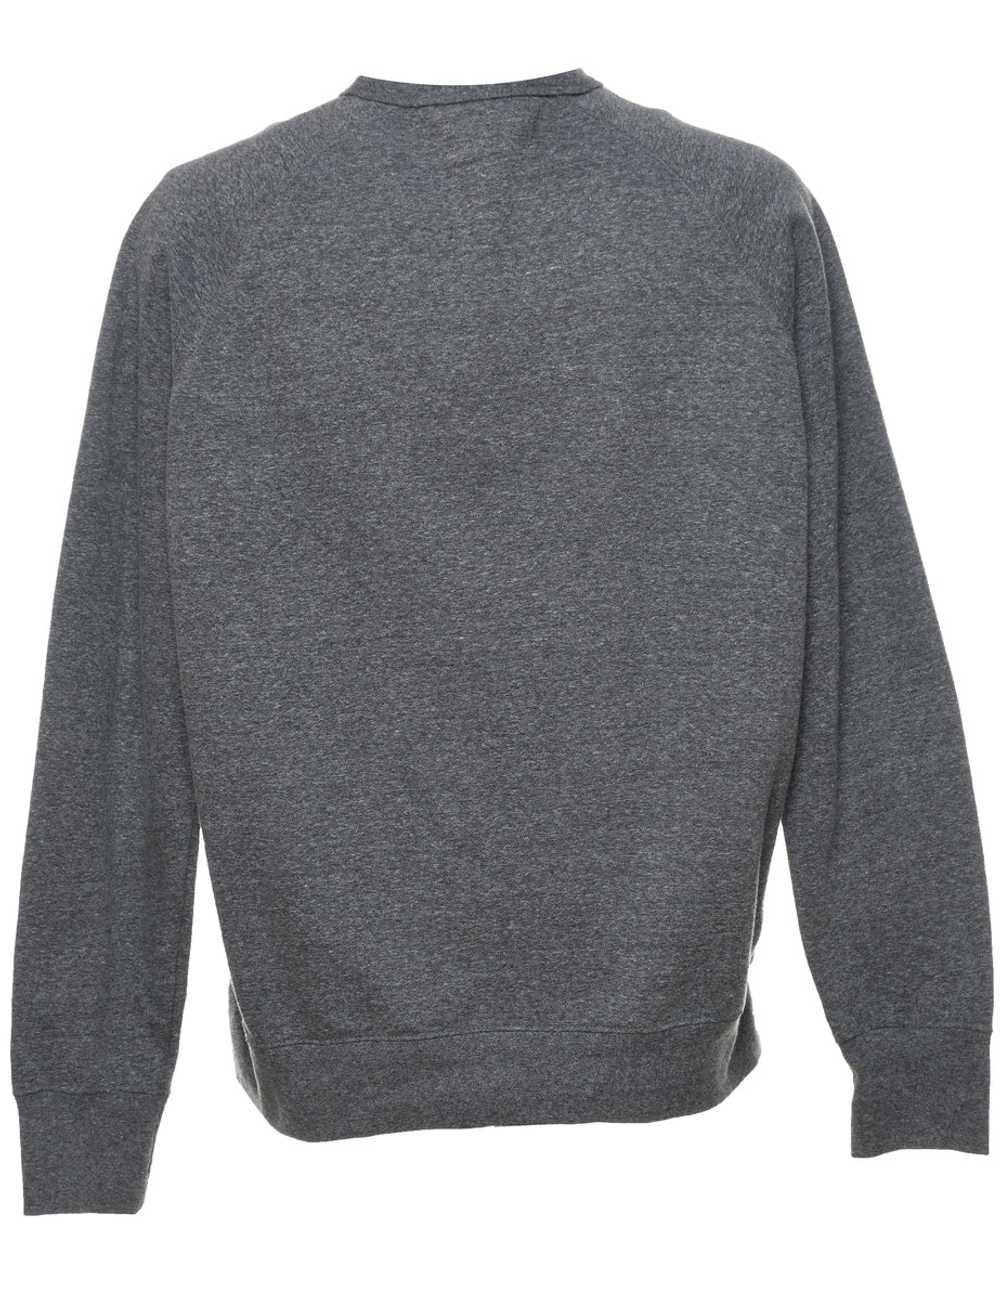 Champion Plain Sweatshirt - L - image 2